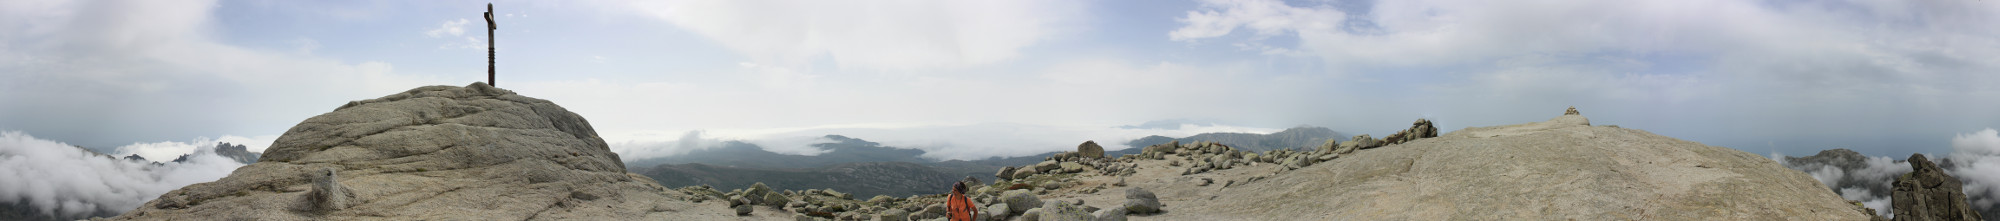 Gipfelpanorama (Foto: chari , Monte Incudine, Korsika, Frankreich am 10.06.2019) [5198]